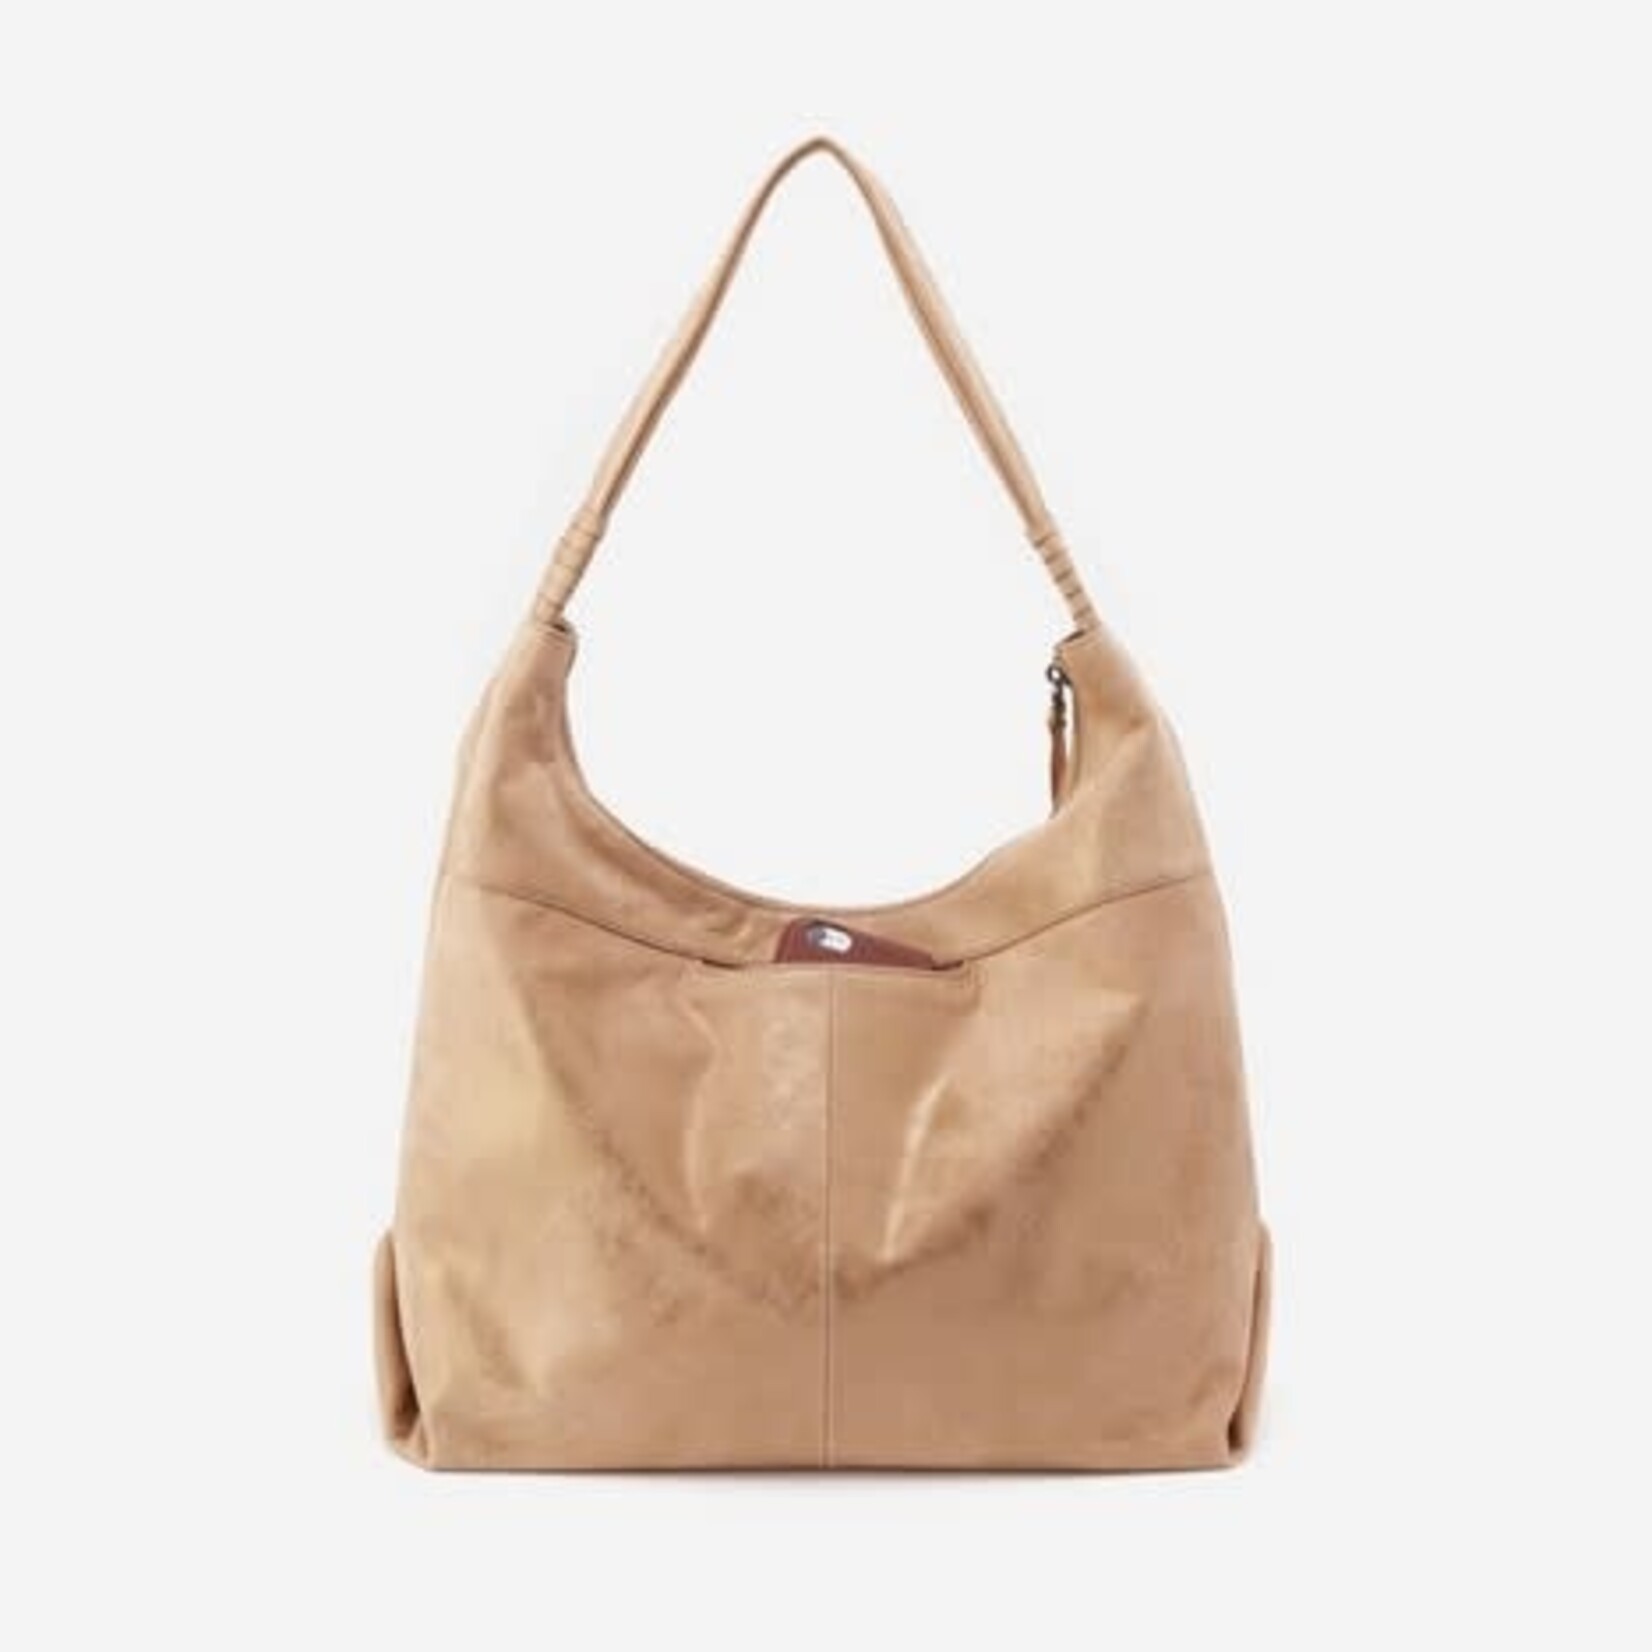 HOBO Astrid Metallic Shimmer Nubuck Leather Handbag